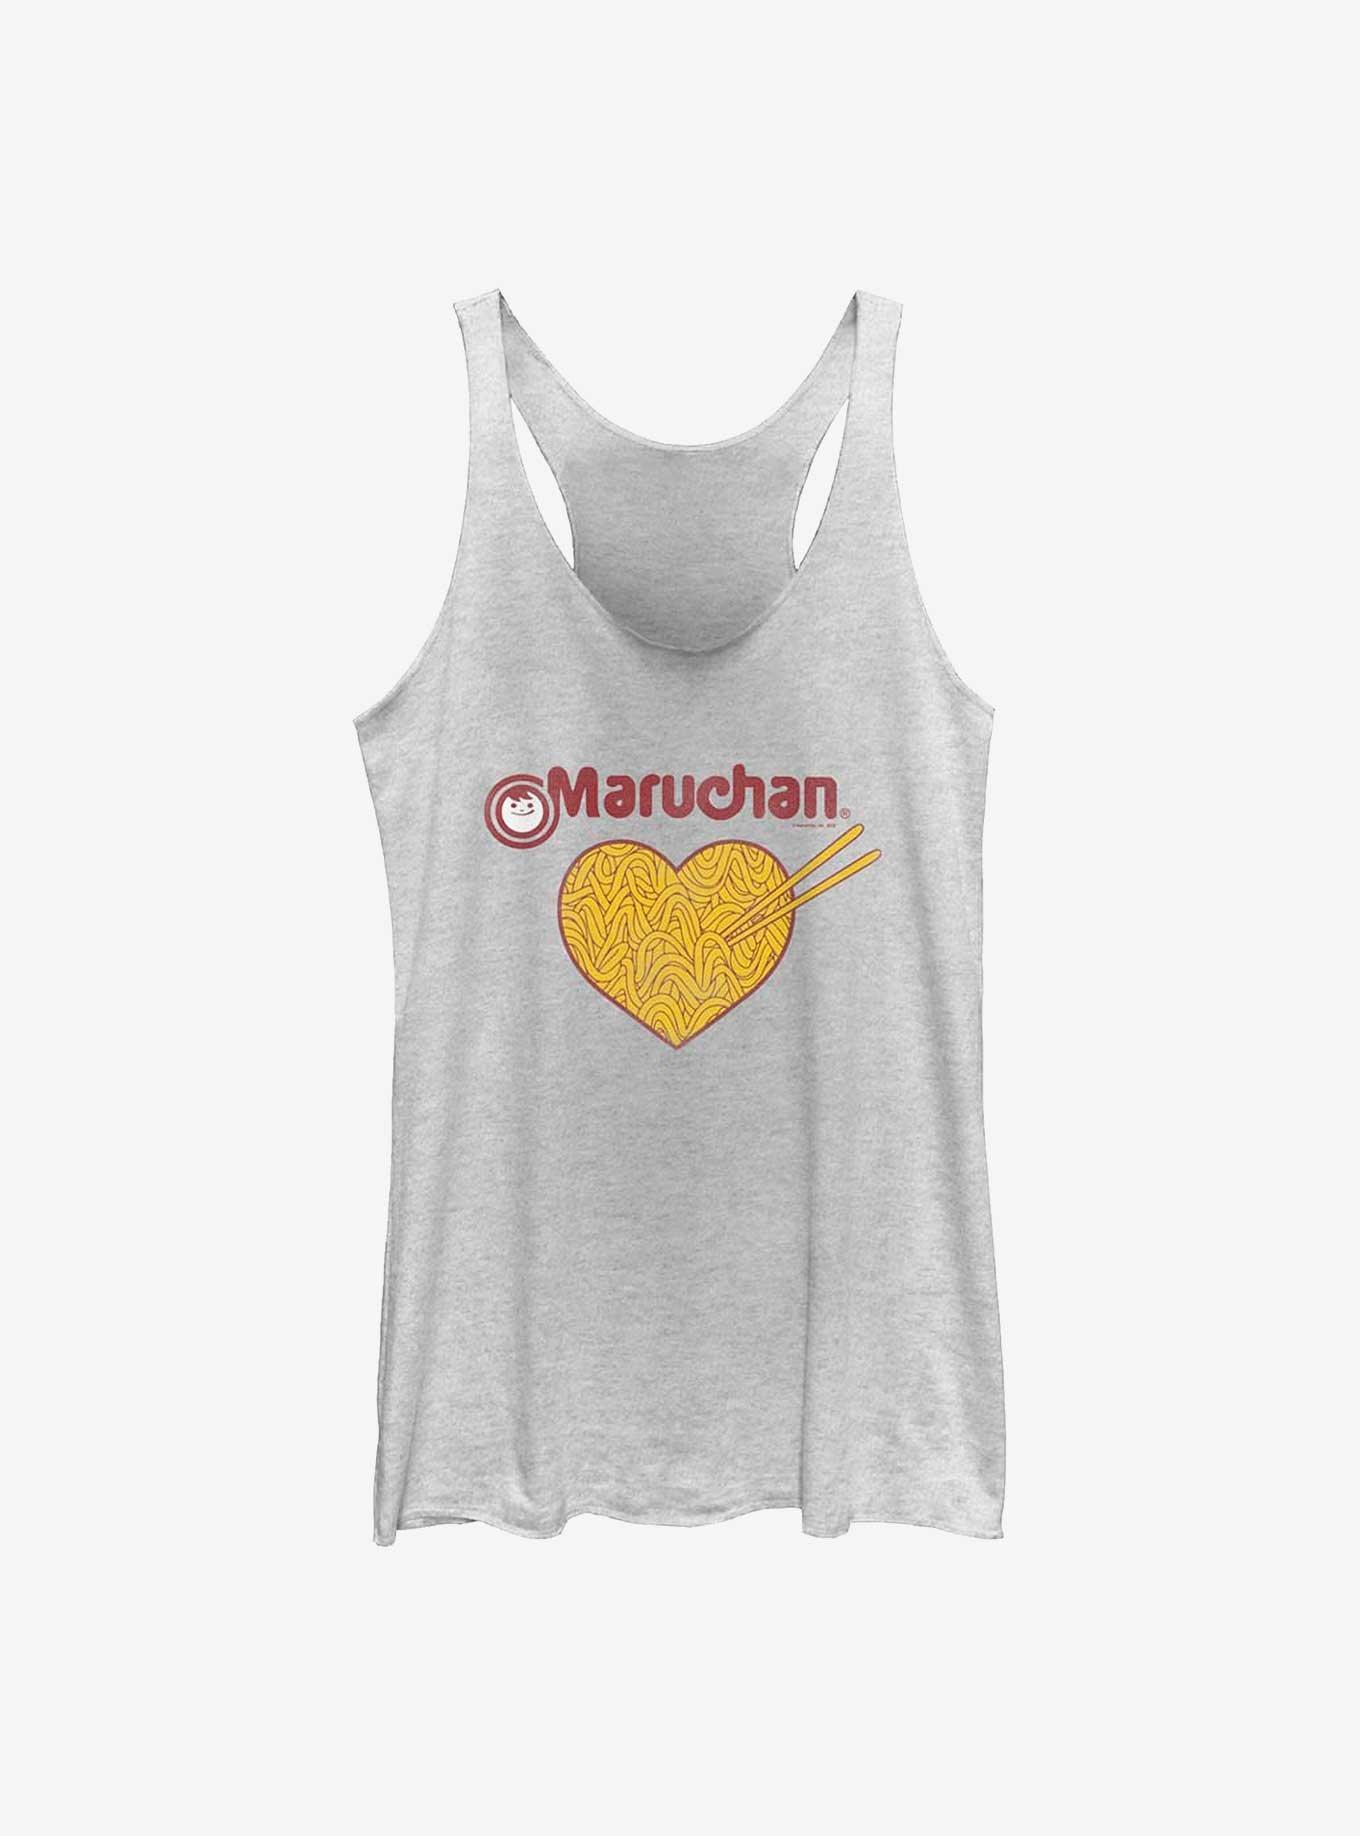 Maruchan Noodles Heart Womens Tank Top, WHITE HTR, hi-res